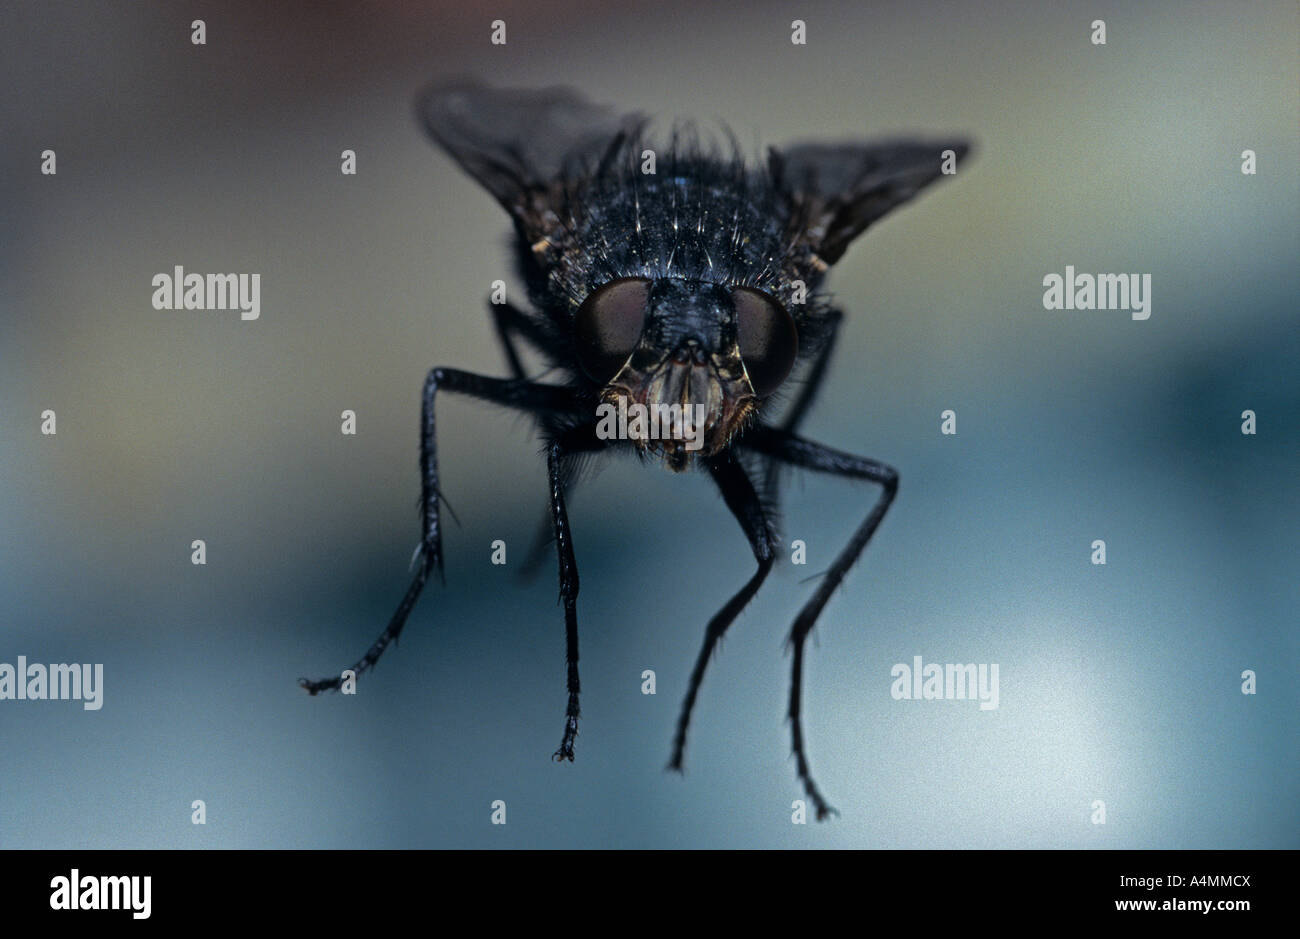 A house fly macrophotograph (Musca domestica) in flight. Macrophotographie d'une mouche (Musca domestica) en plein vol. Stock Photo